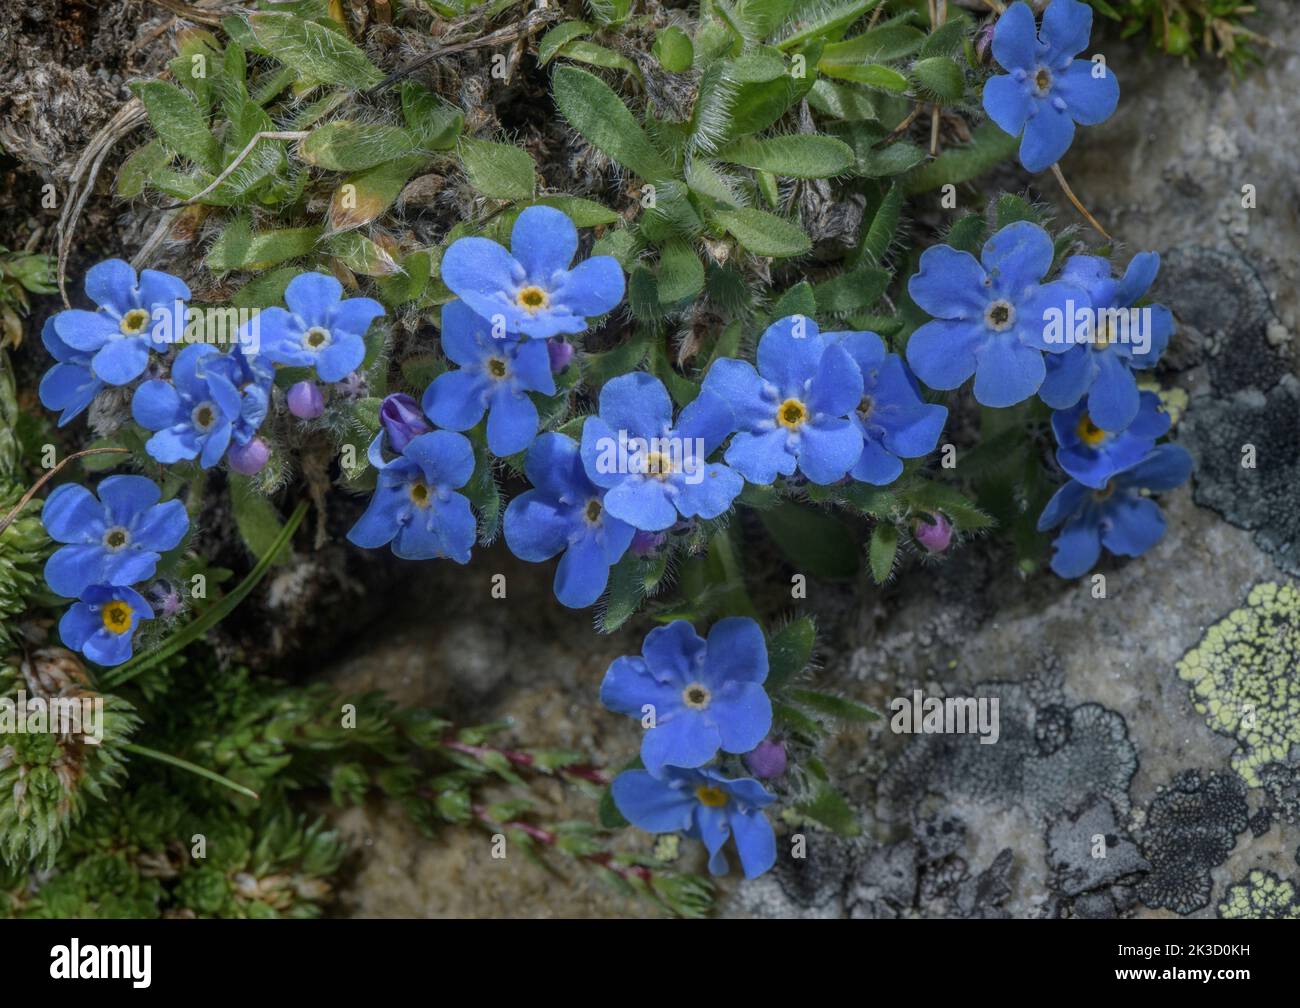 King of the Alps, Eritrichium nanum in flower on acid rocks at high altitude, Italian Alps. Stock Photo